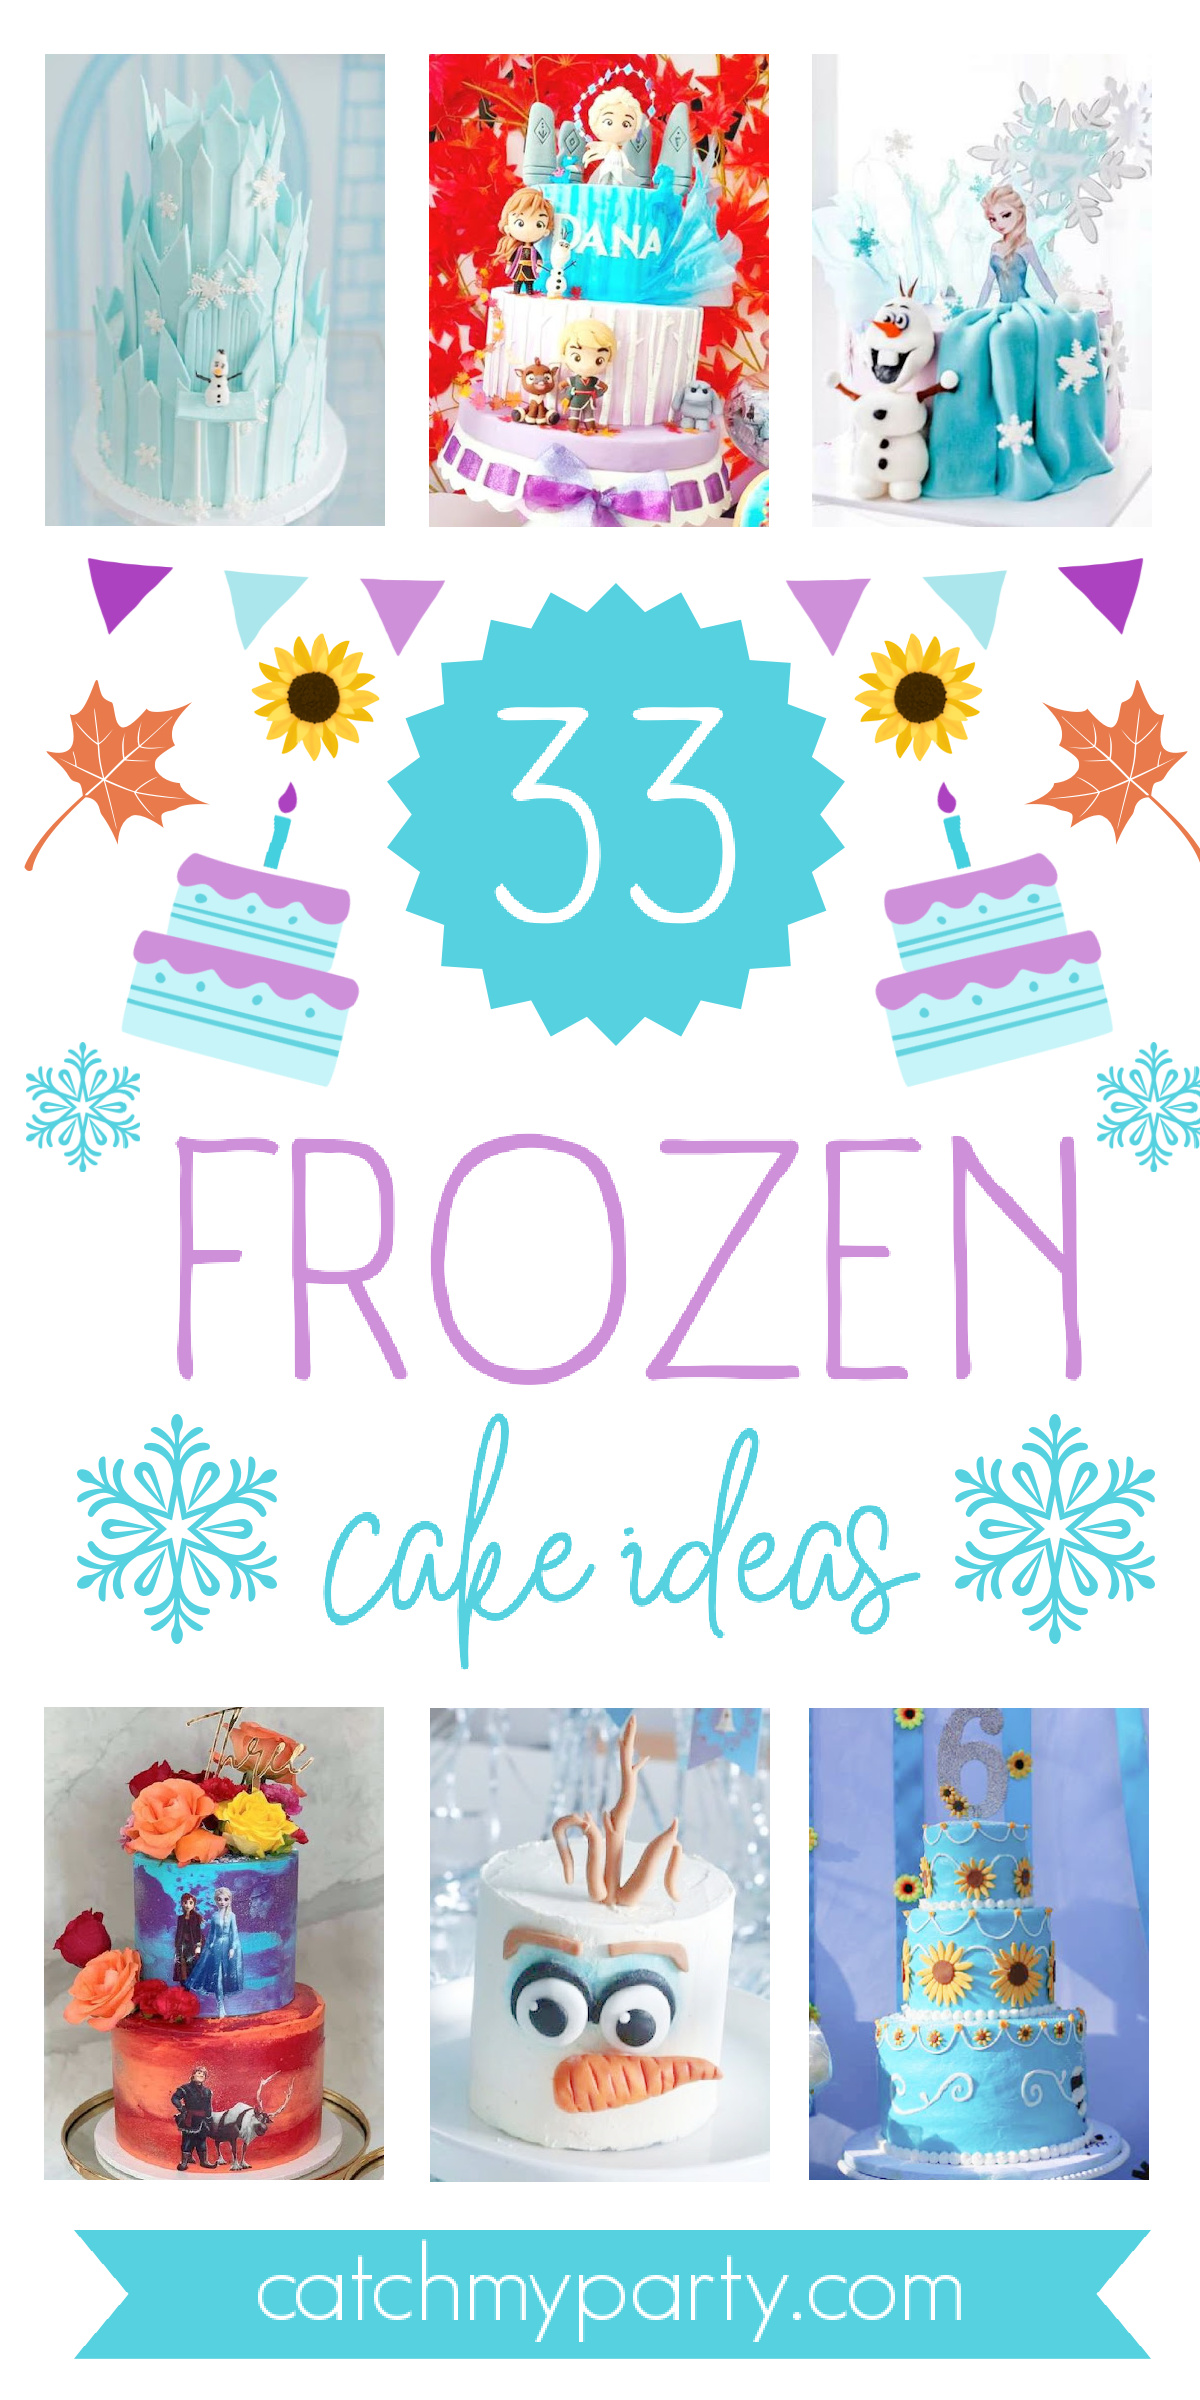 33 Impressive Frozen and Frozen 2 Cake Ideas!